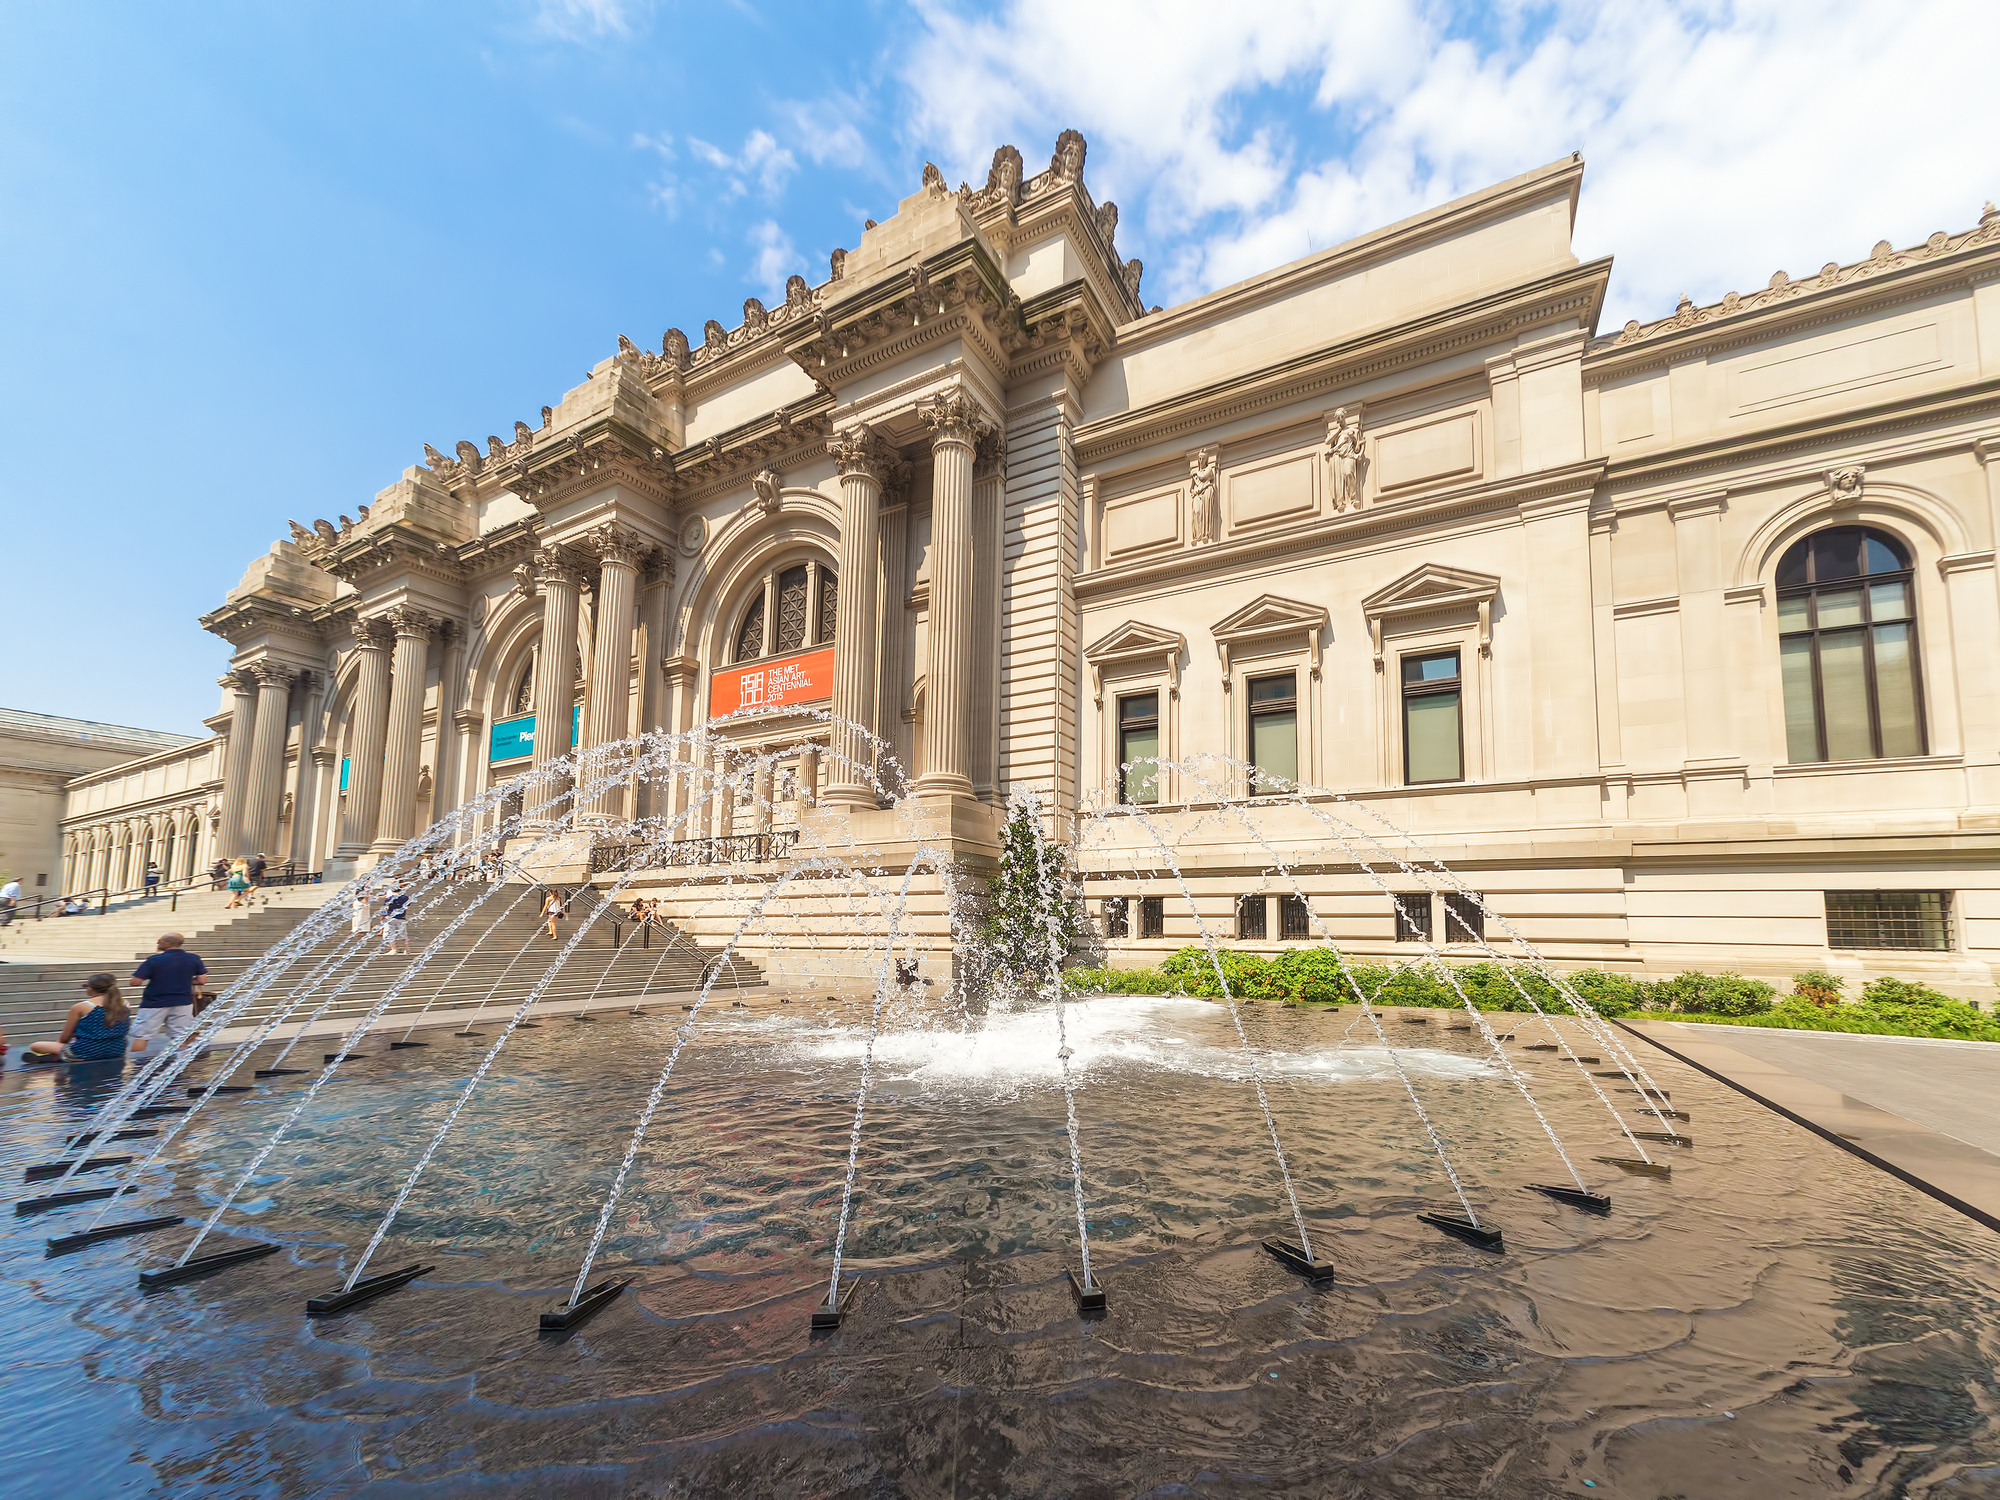 Metropolitan Museum of Art (The Met)